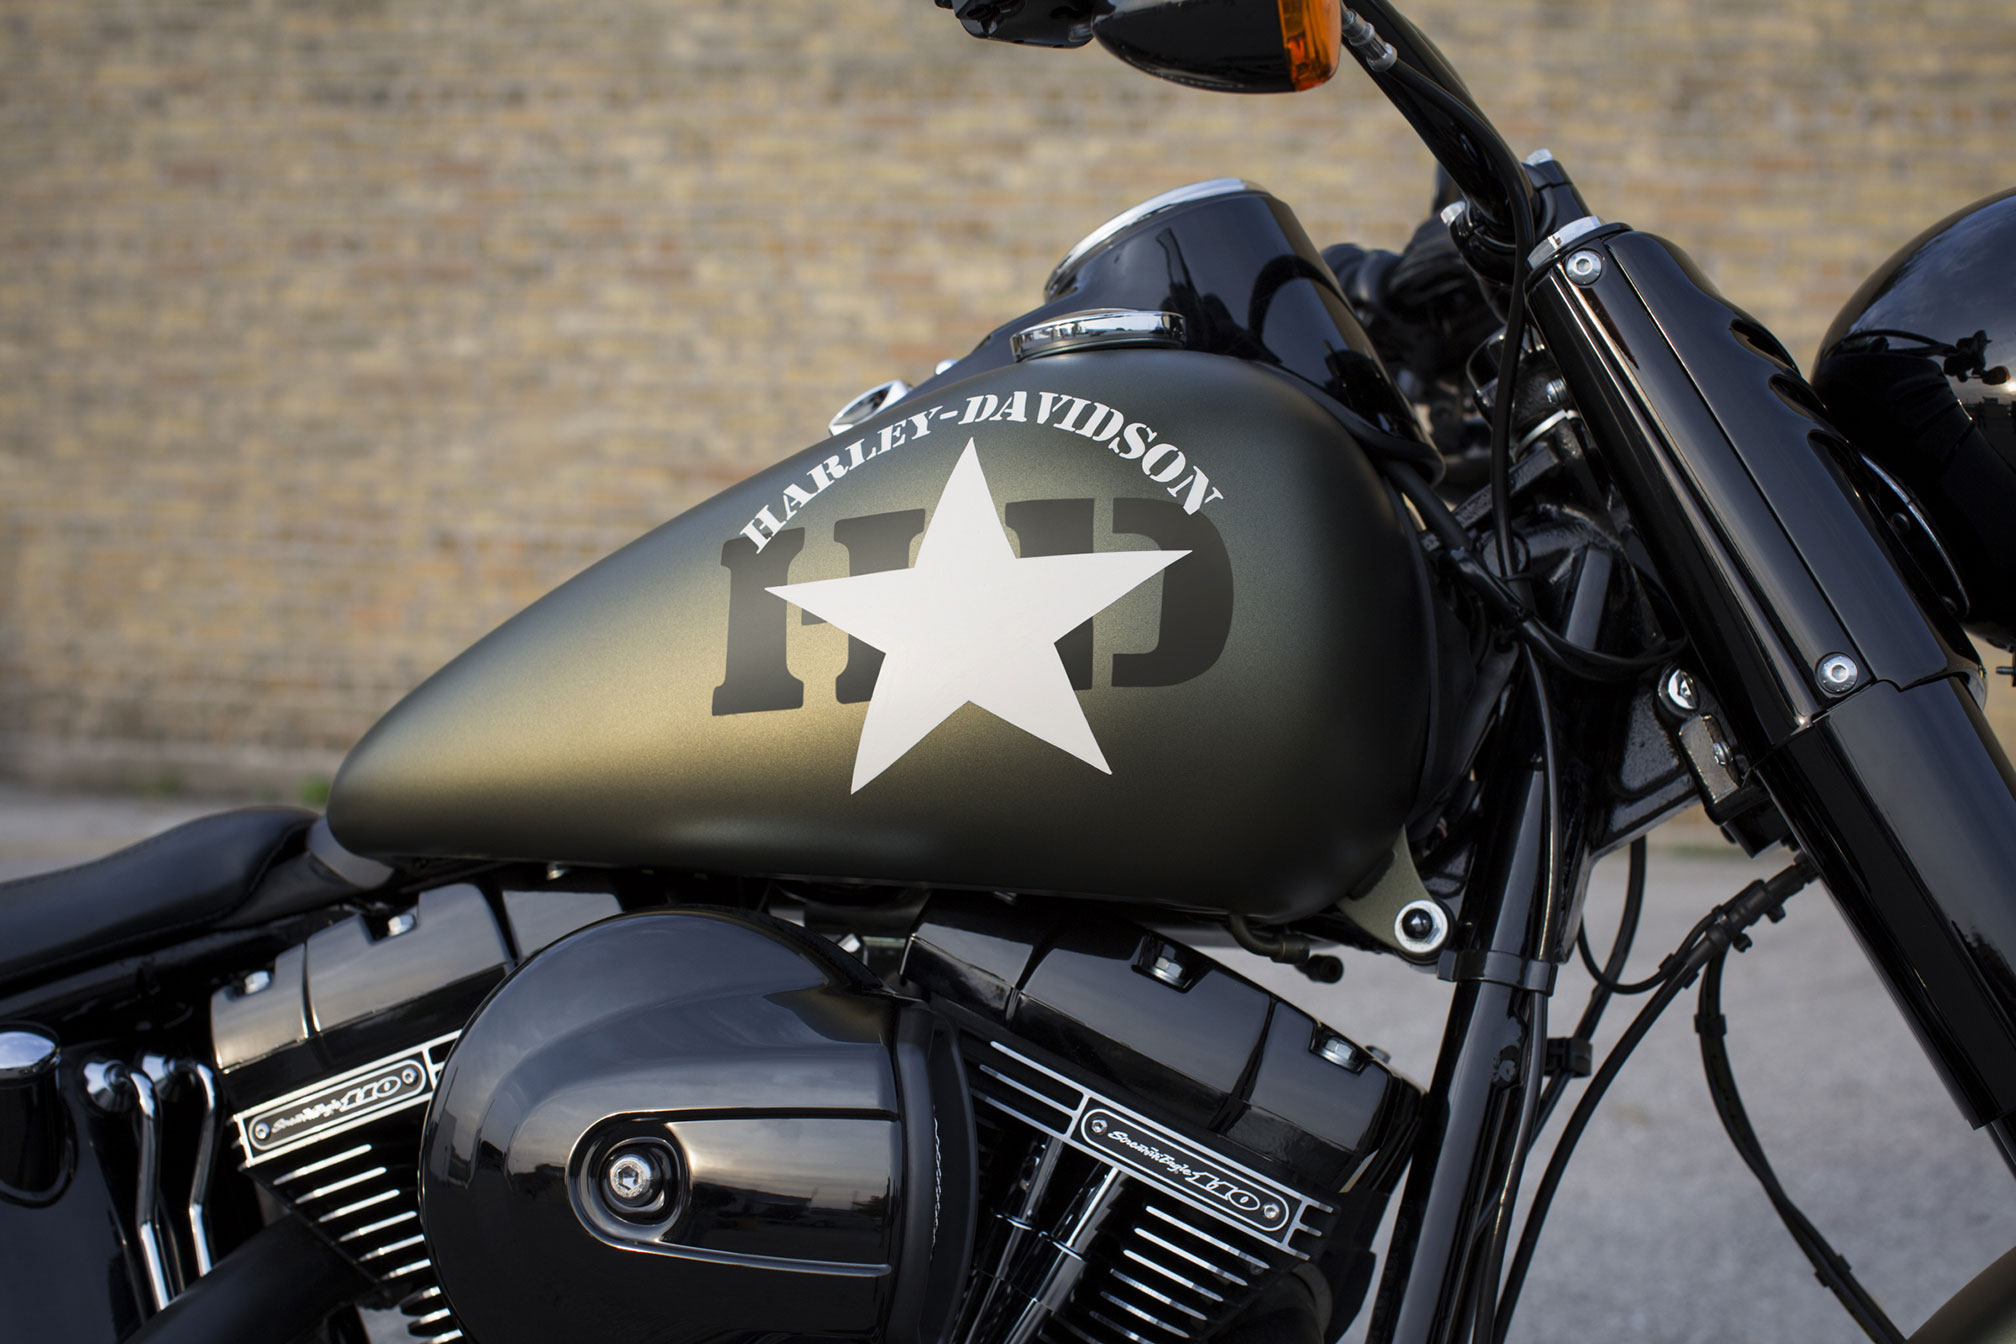 2017 Harley Davidson Softail Slim S Review